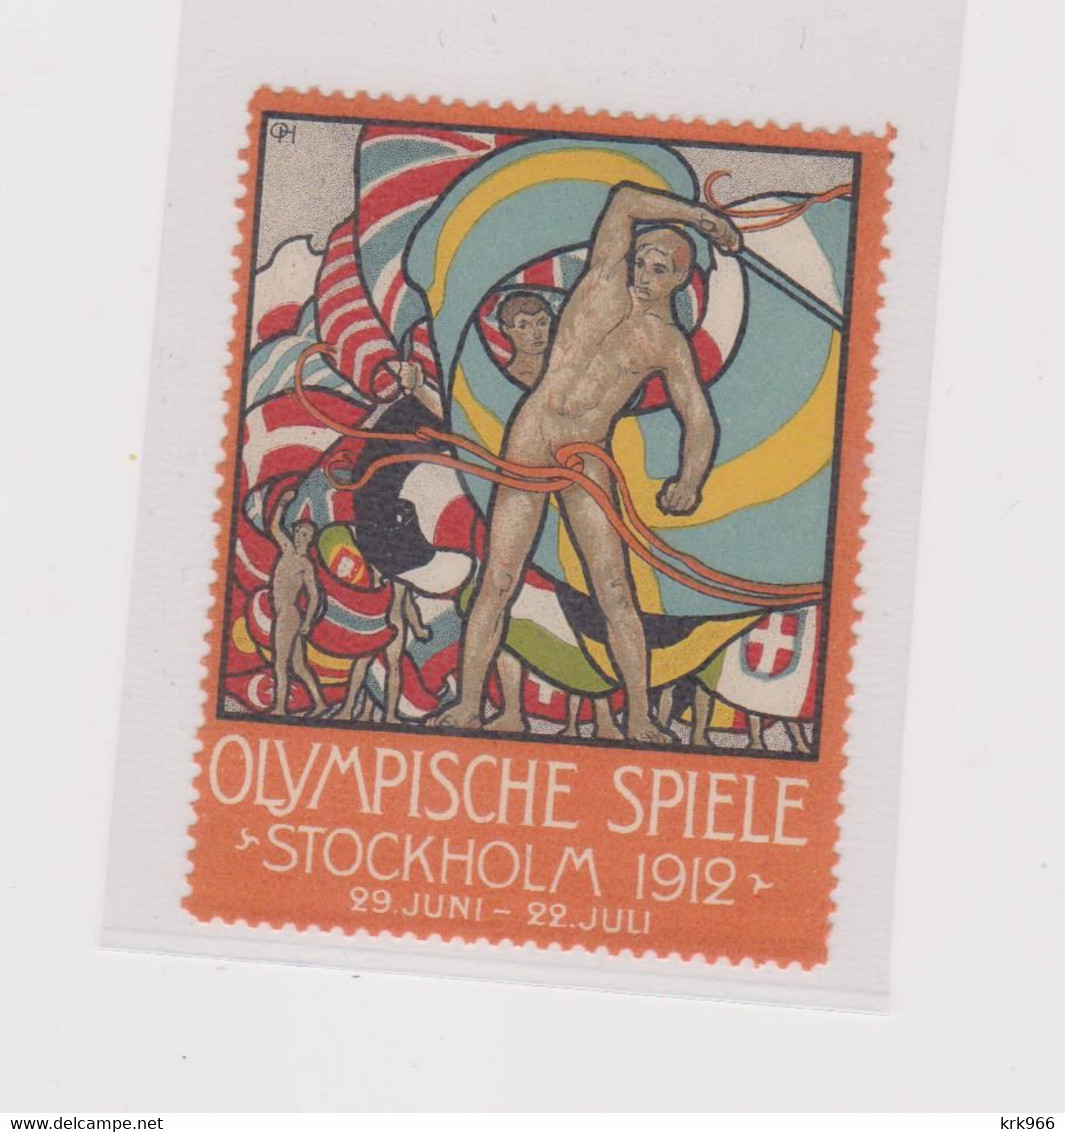 SWEDEN Poster Stamp OLYMPIC GAMES 1912 STOCKHOLM - Verano 1912: Estocolmo